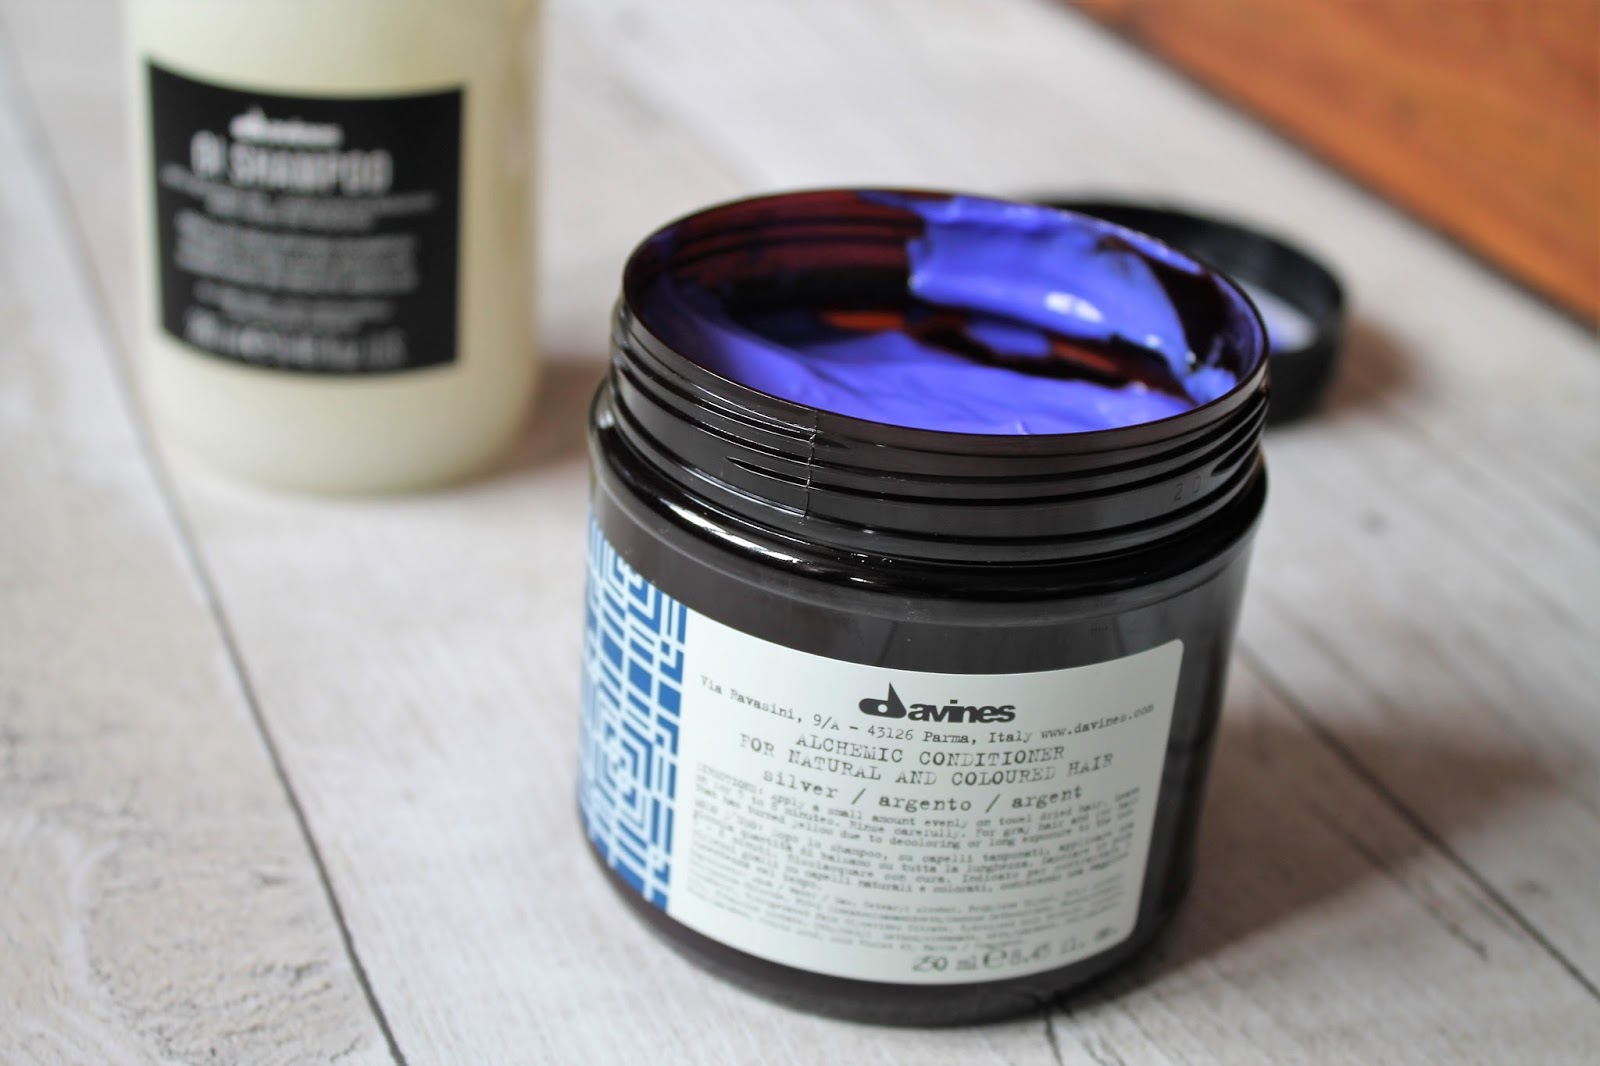 Davines OI Shampoo and Alchemic Conditioner | beekeyper